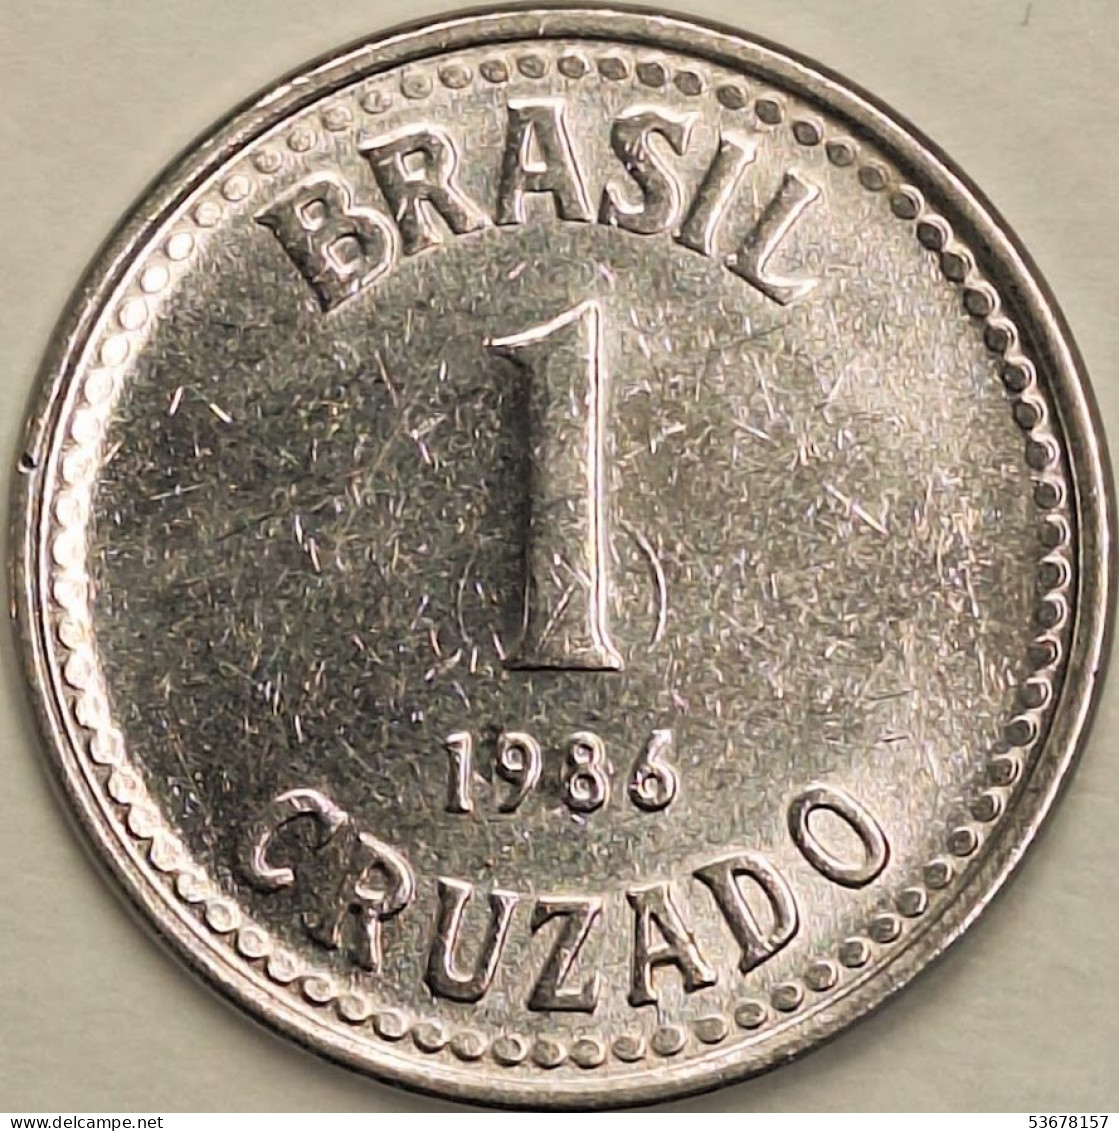 Brazil - Cruzado 1986, KM# 605 (#3262) - Brazil